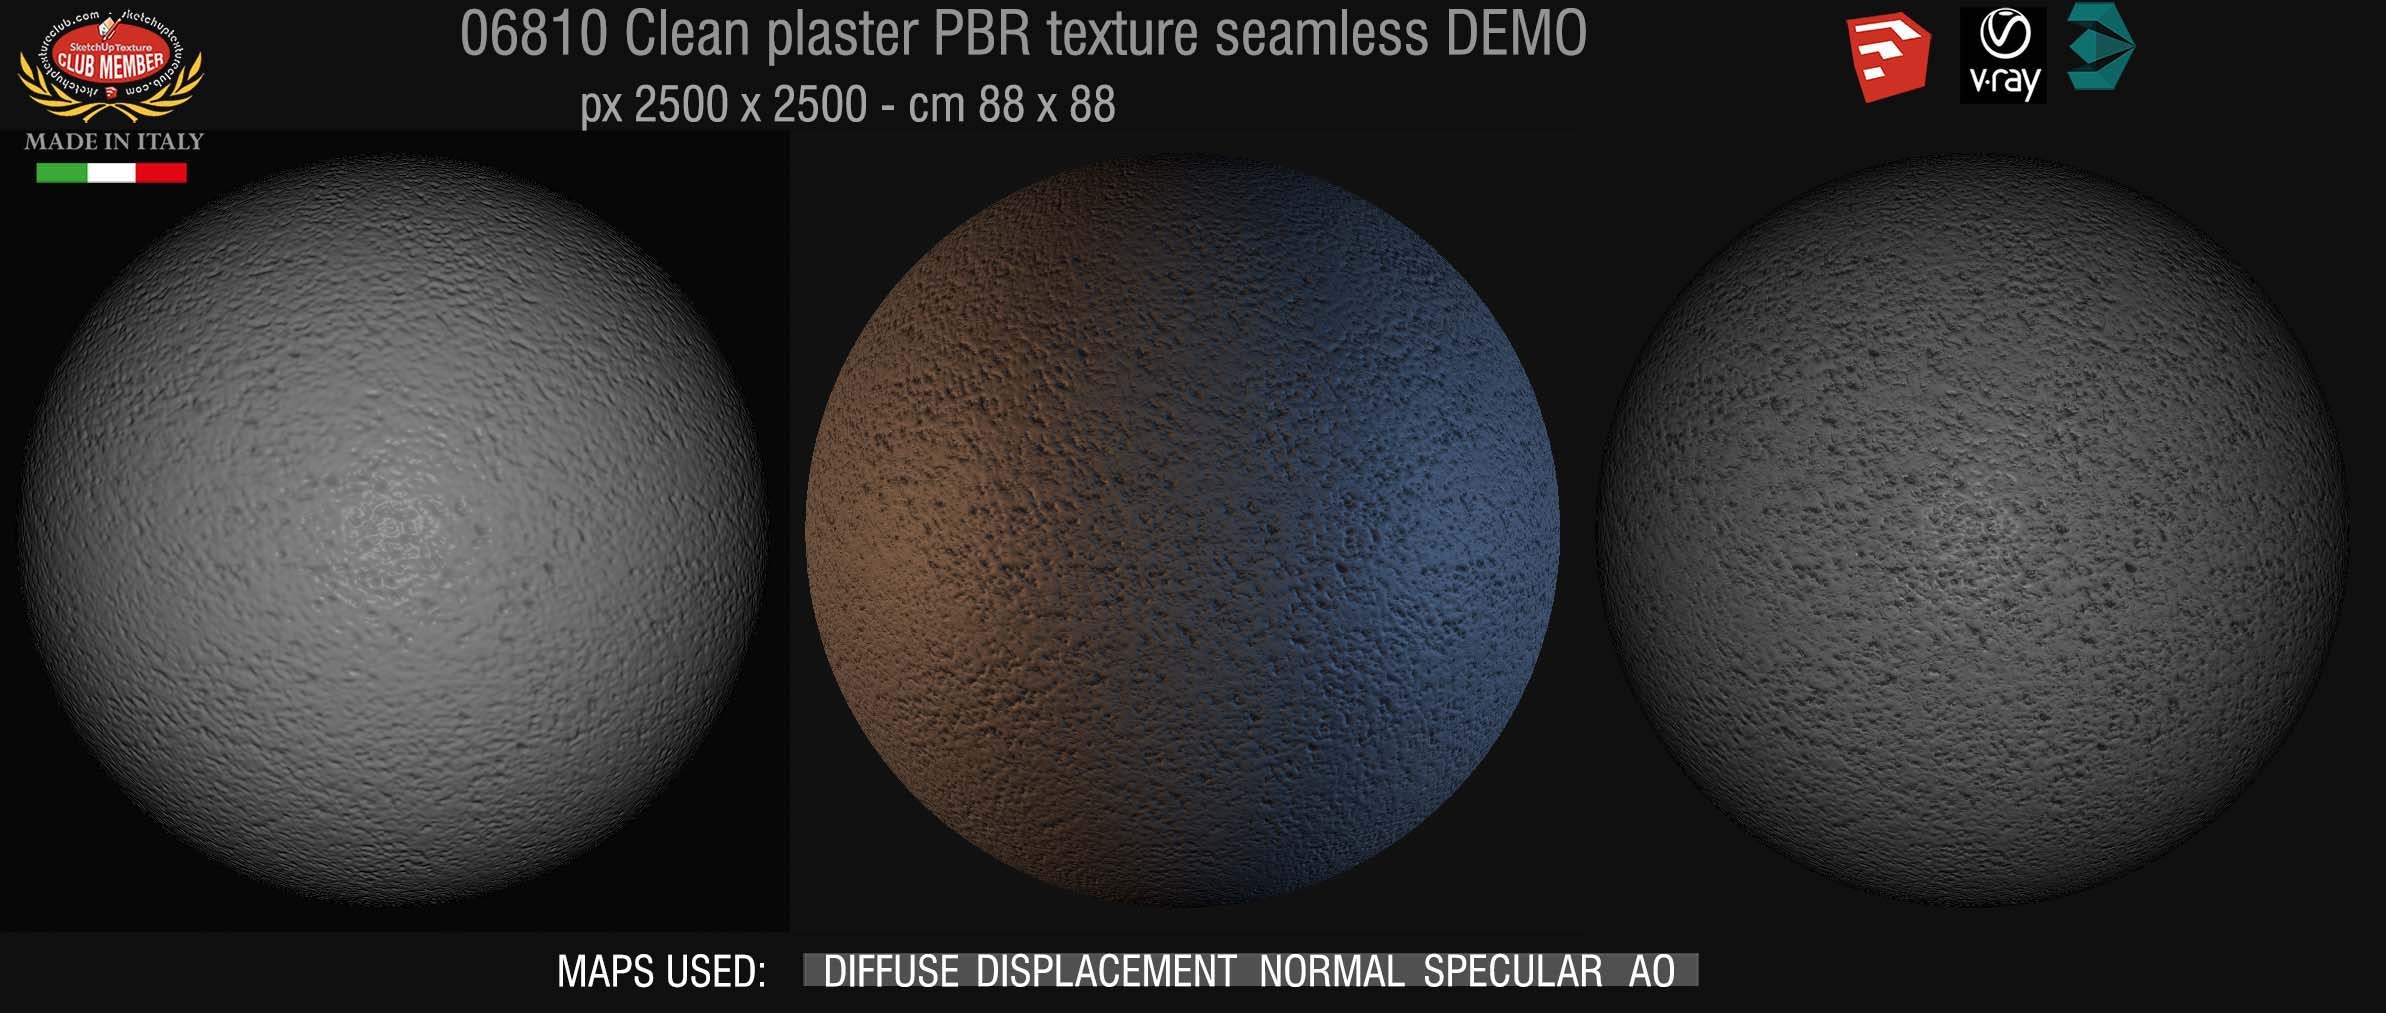 06810 clean plaster PBR texture seamless DEMO